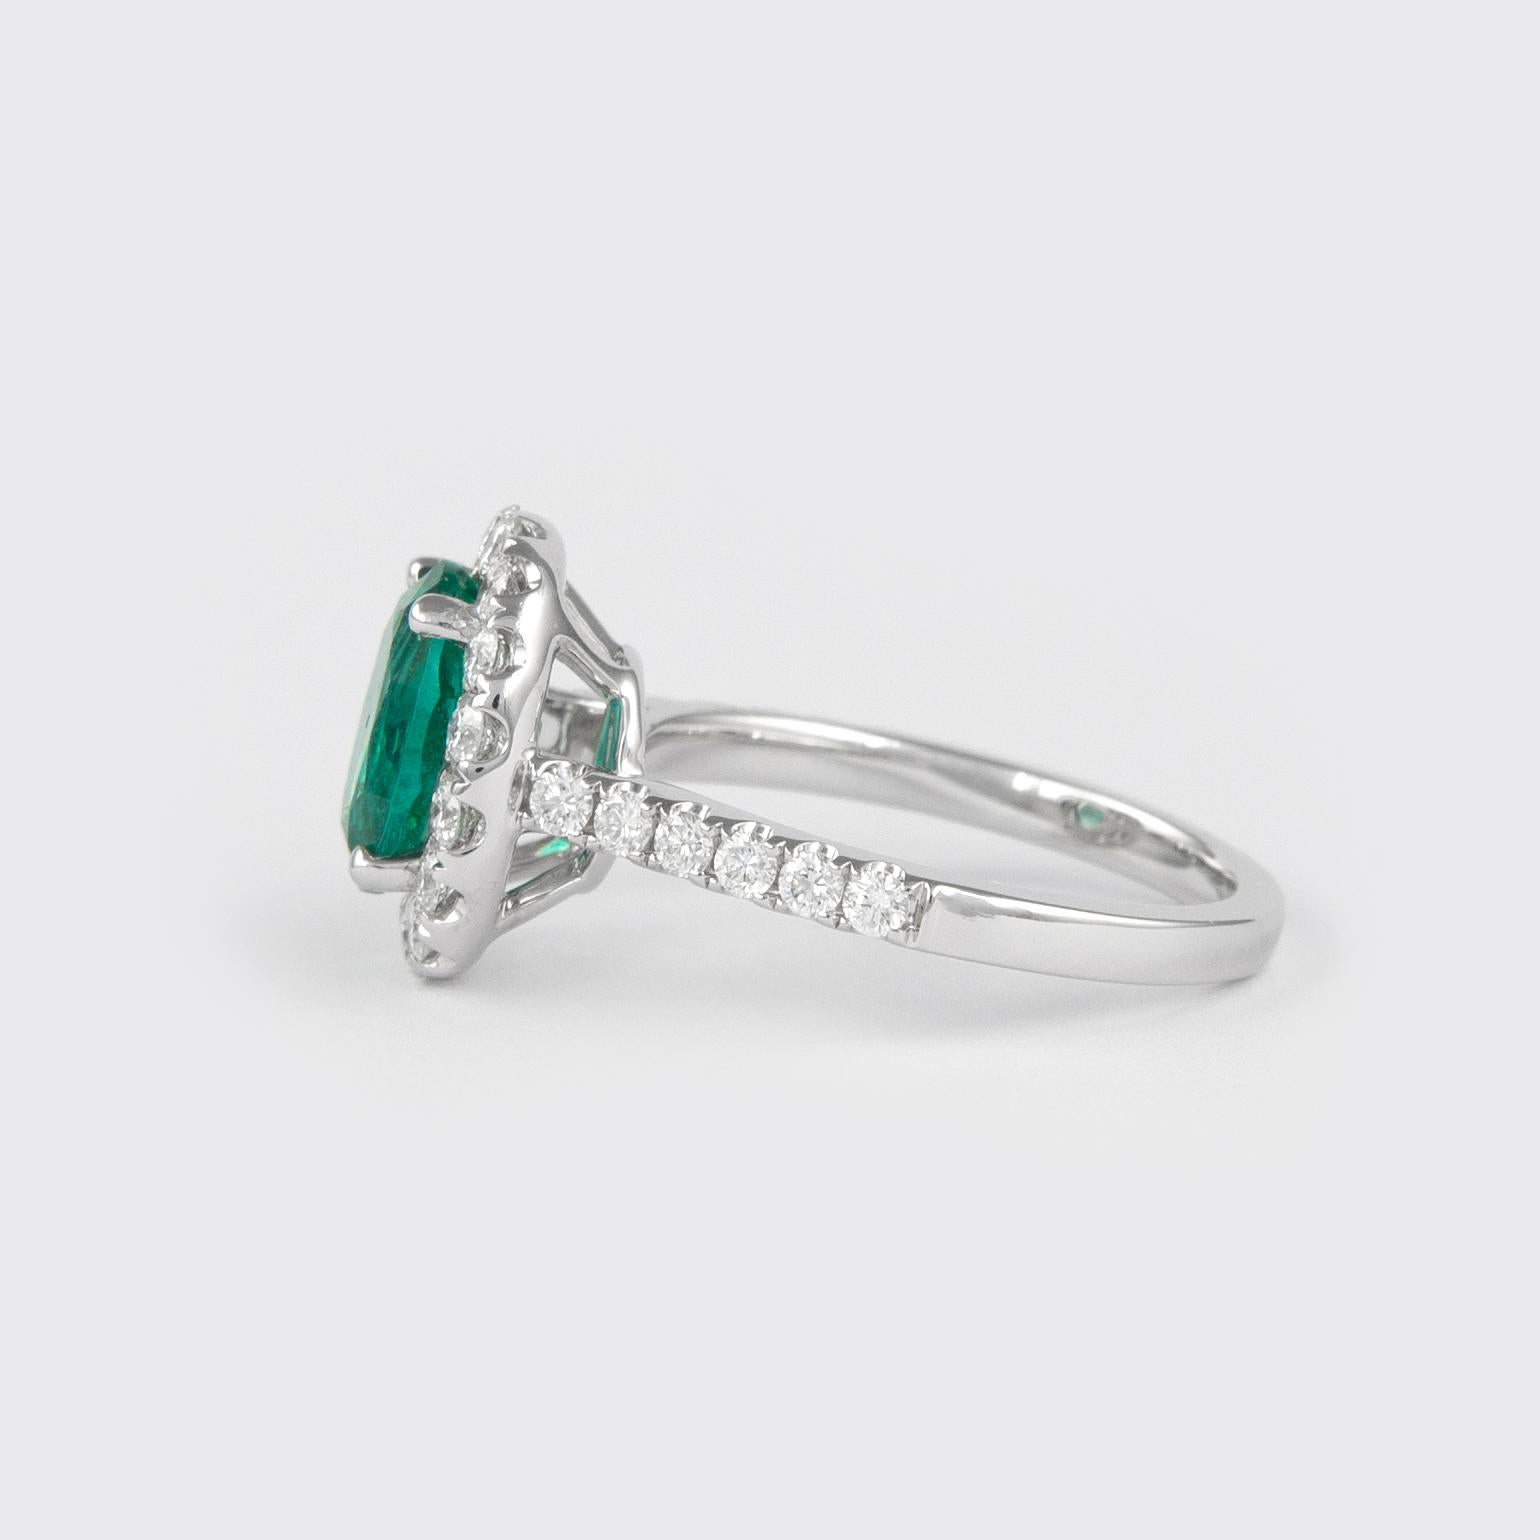 Oval Cut Alexander 1.97 Carat Emerald with Diamond Halo Ring 18 Karat White Gold